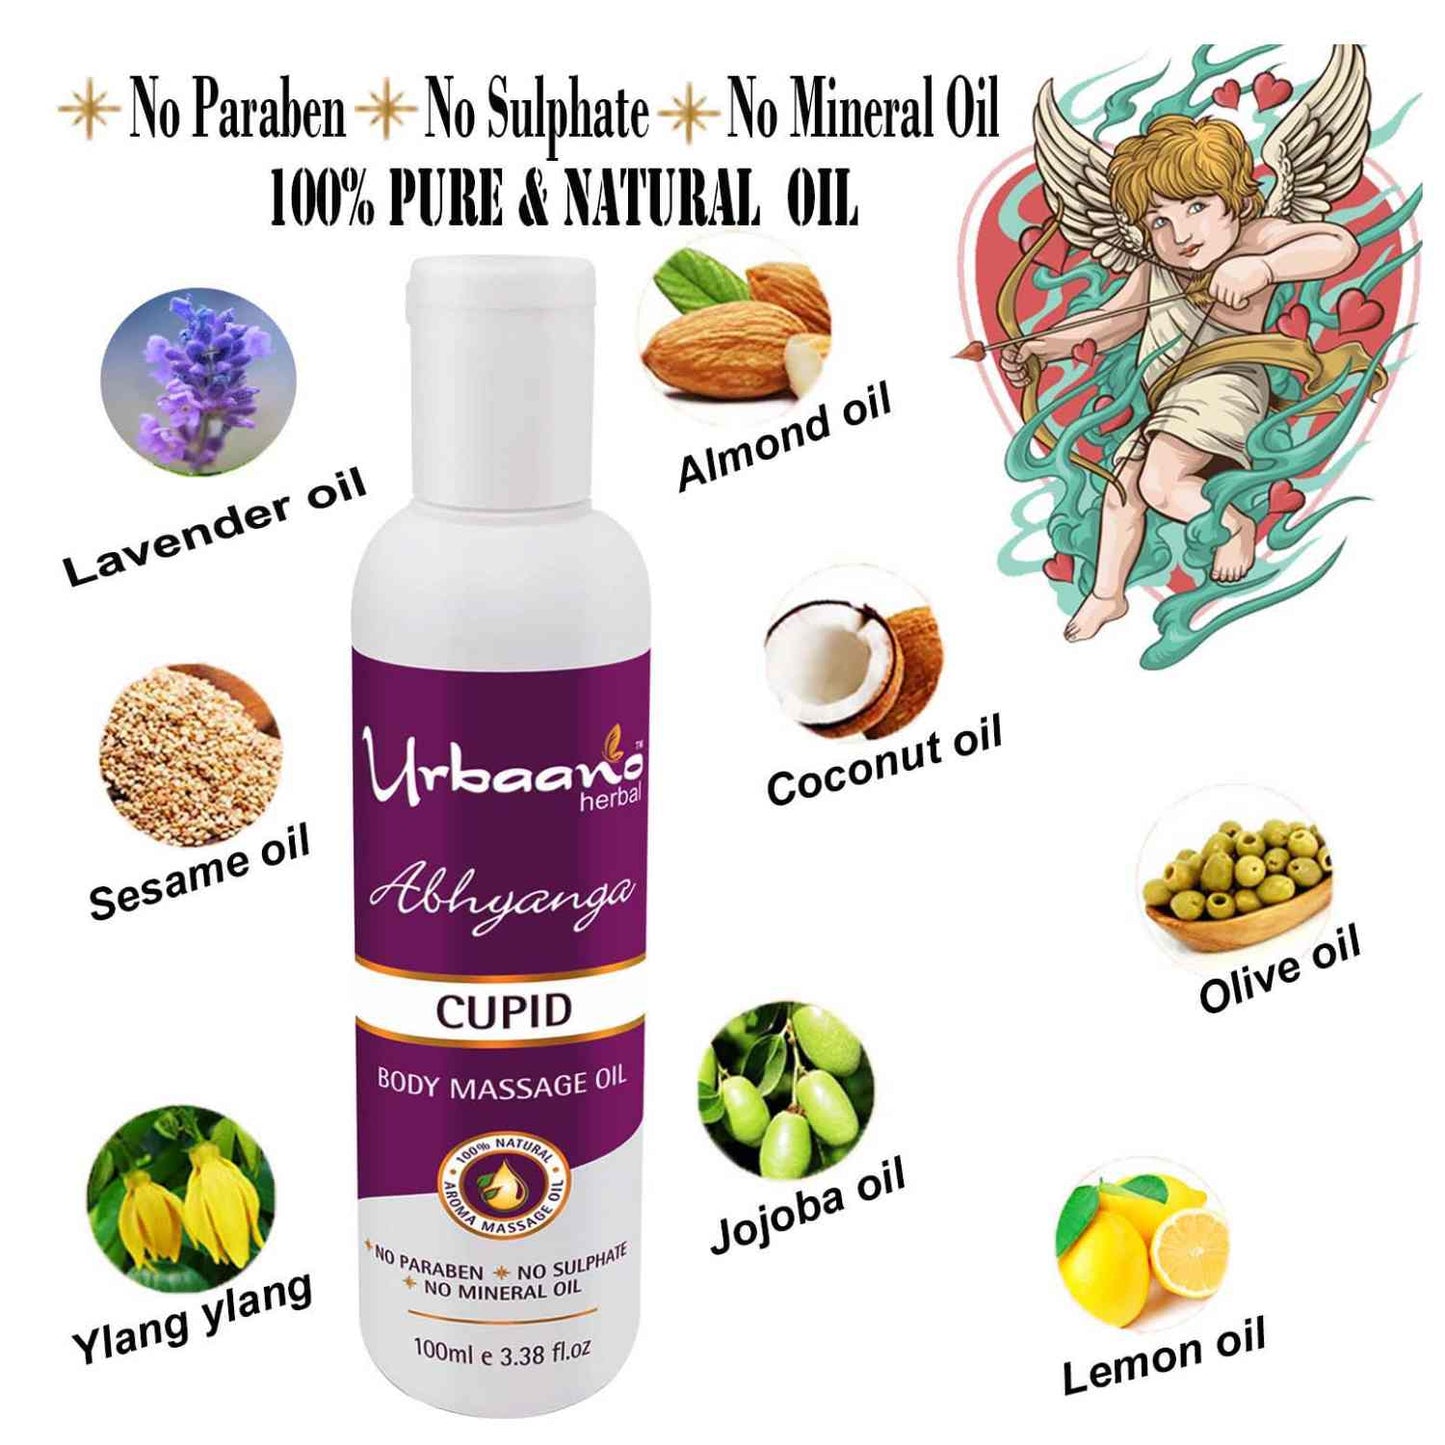 urbaano herbal abhyanga cupid body massage oil for romance with lavender, jojoba, almond, sulphate, mineral oil free